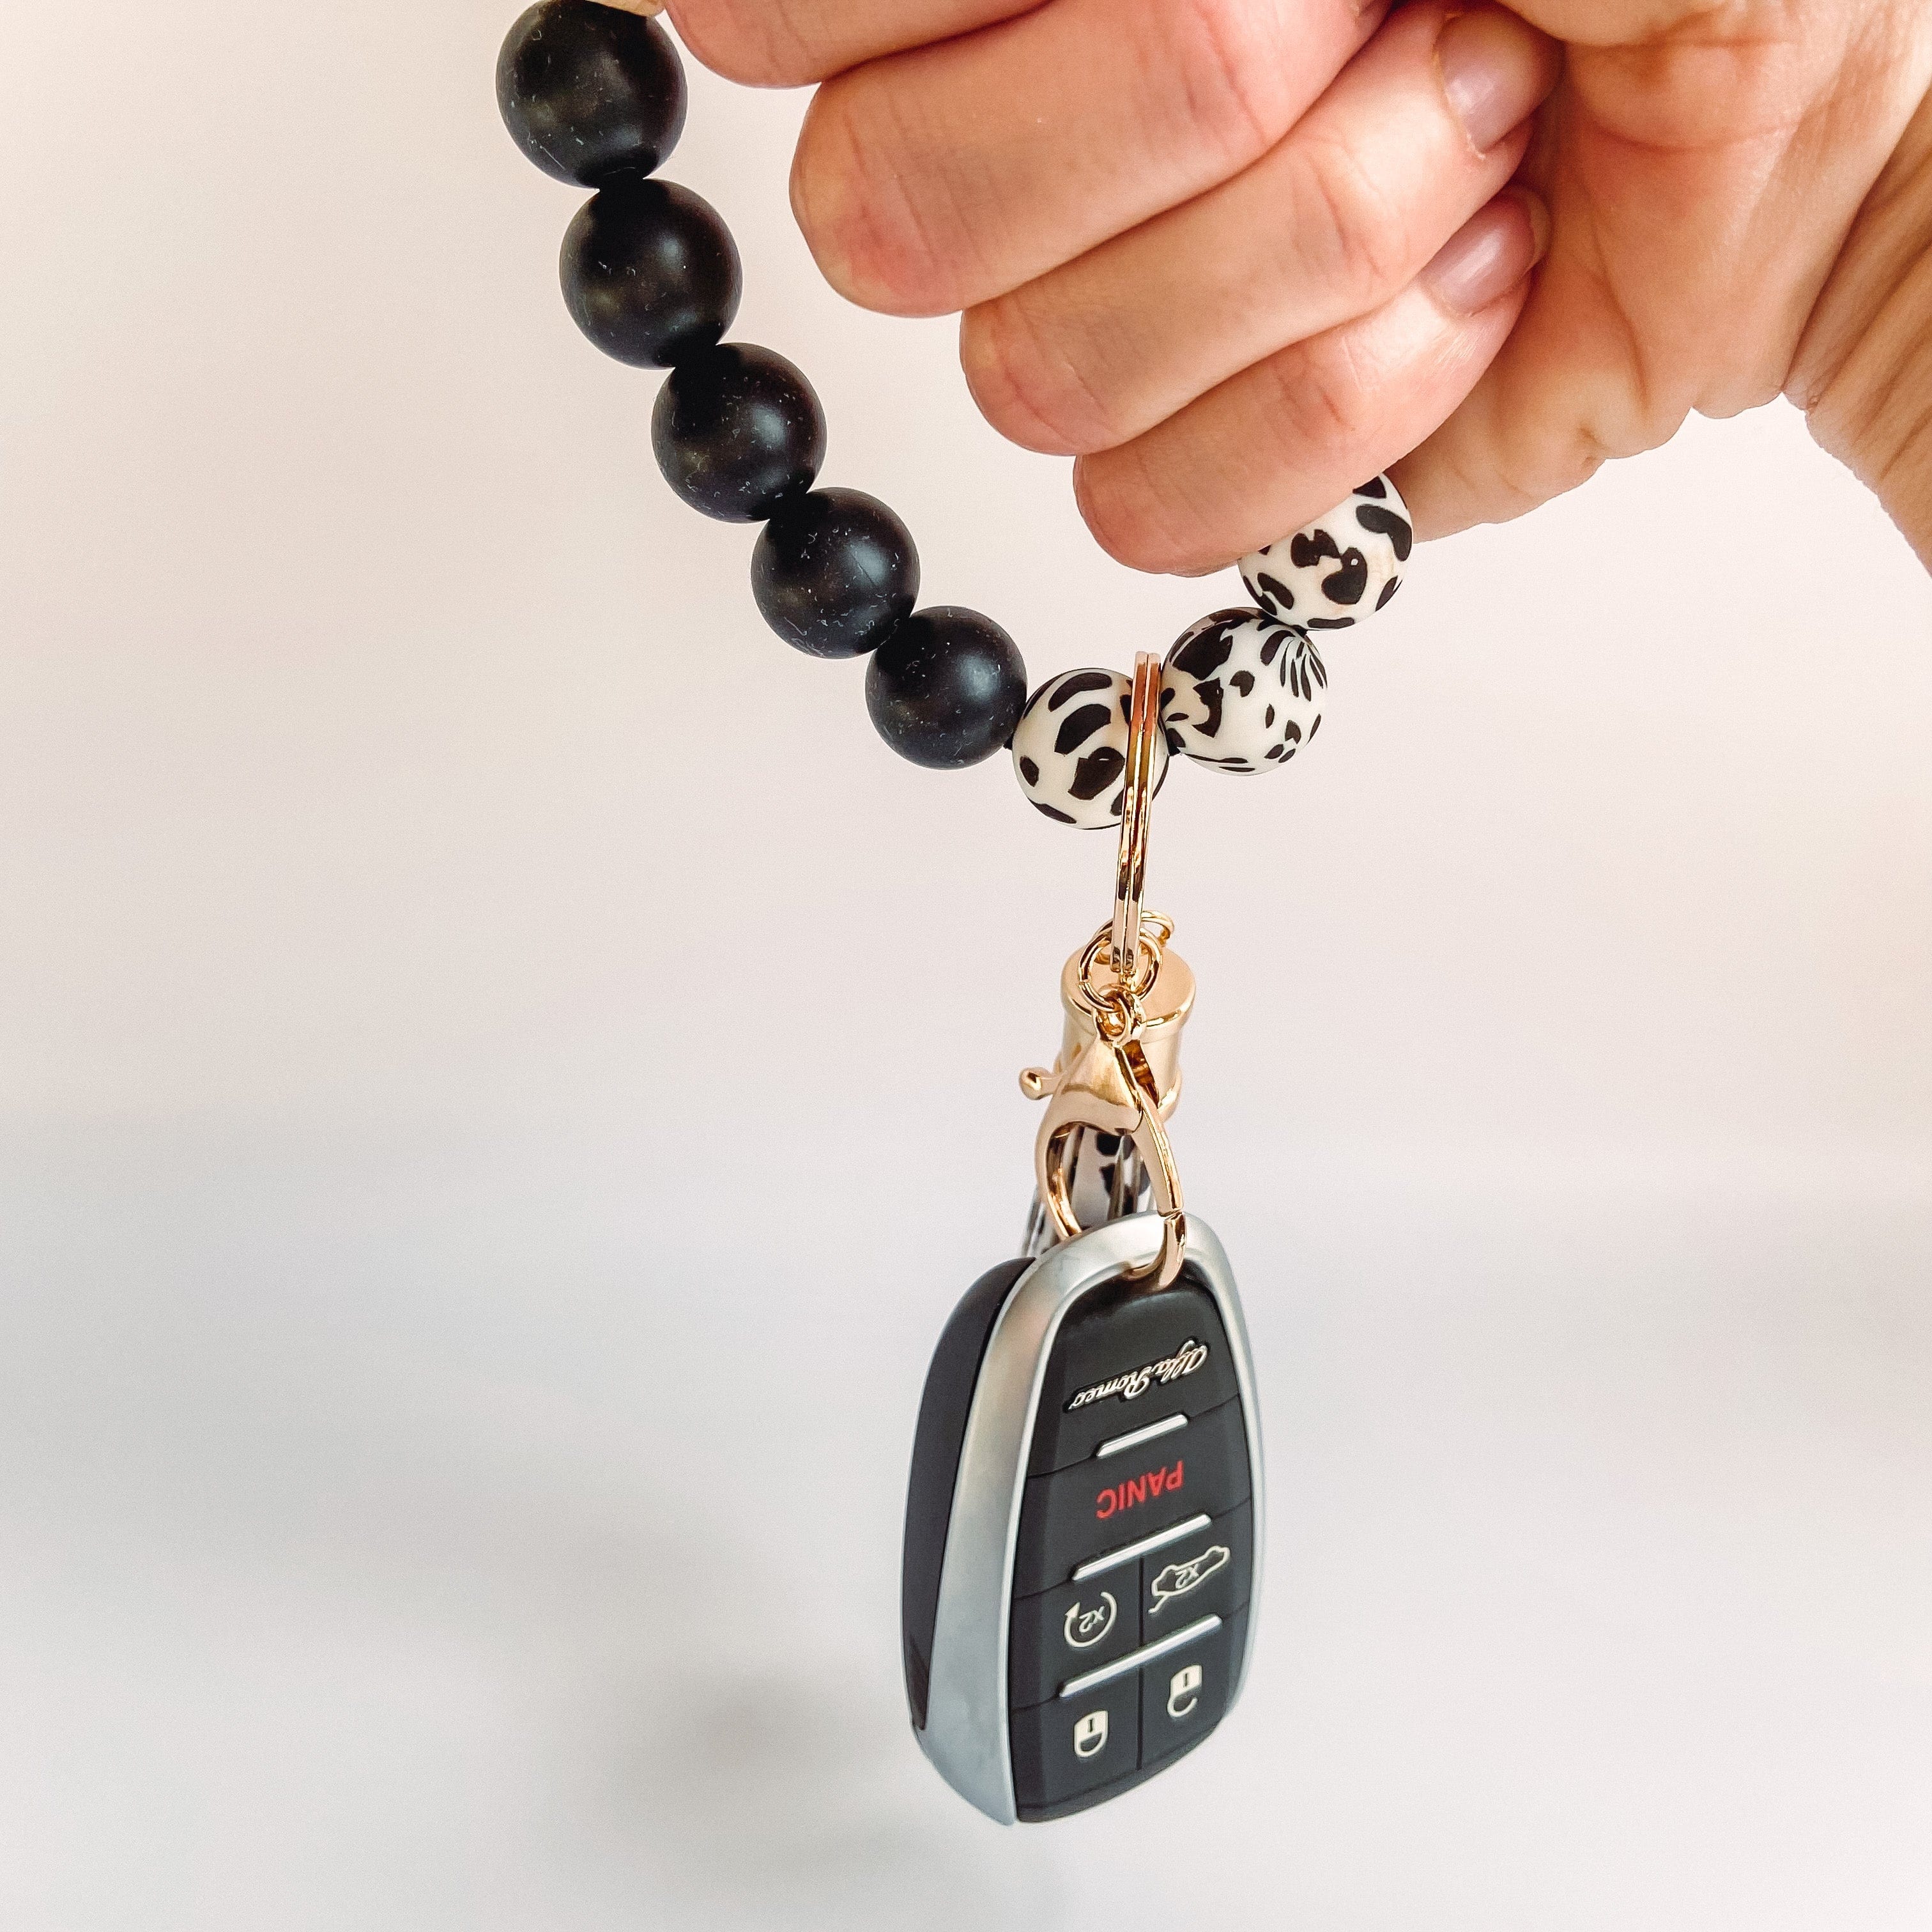 Ausbay Silicone Keychain: Womens Wristlet Key Ring Bracelet for Car Keys  with Leather Tassel (Black) at Amazon Women's Clothing store